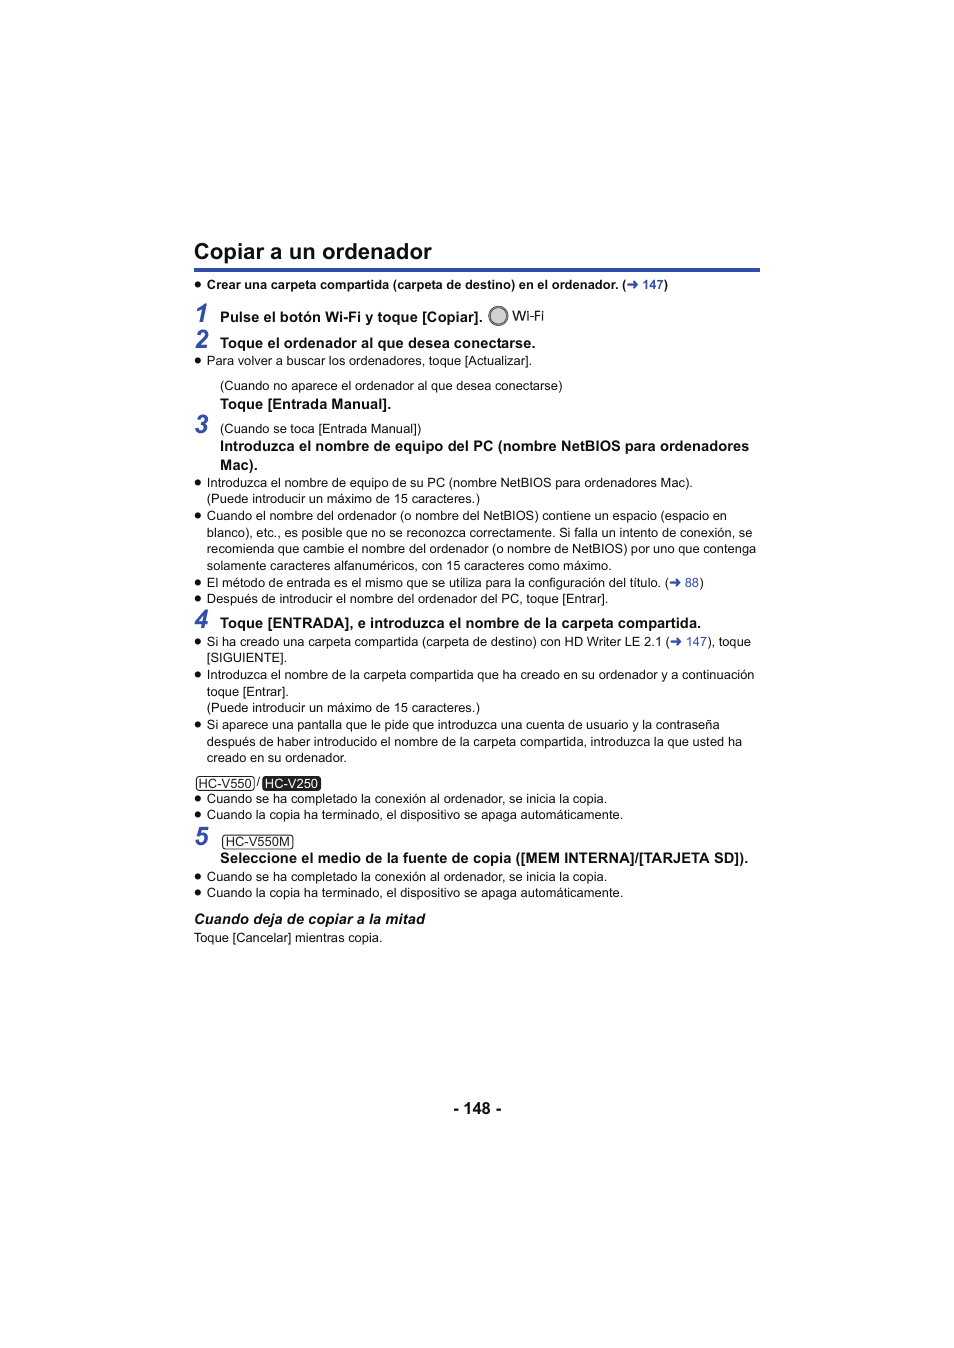 Copiar a un ordenador | Panasonic HCV250EC Manual del usuario | Página 148 / 214